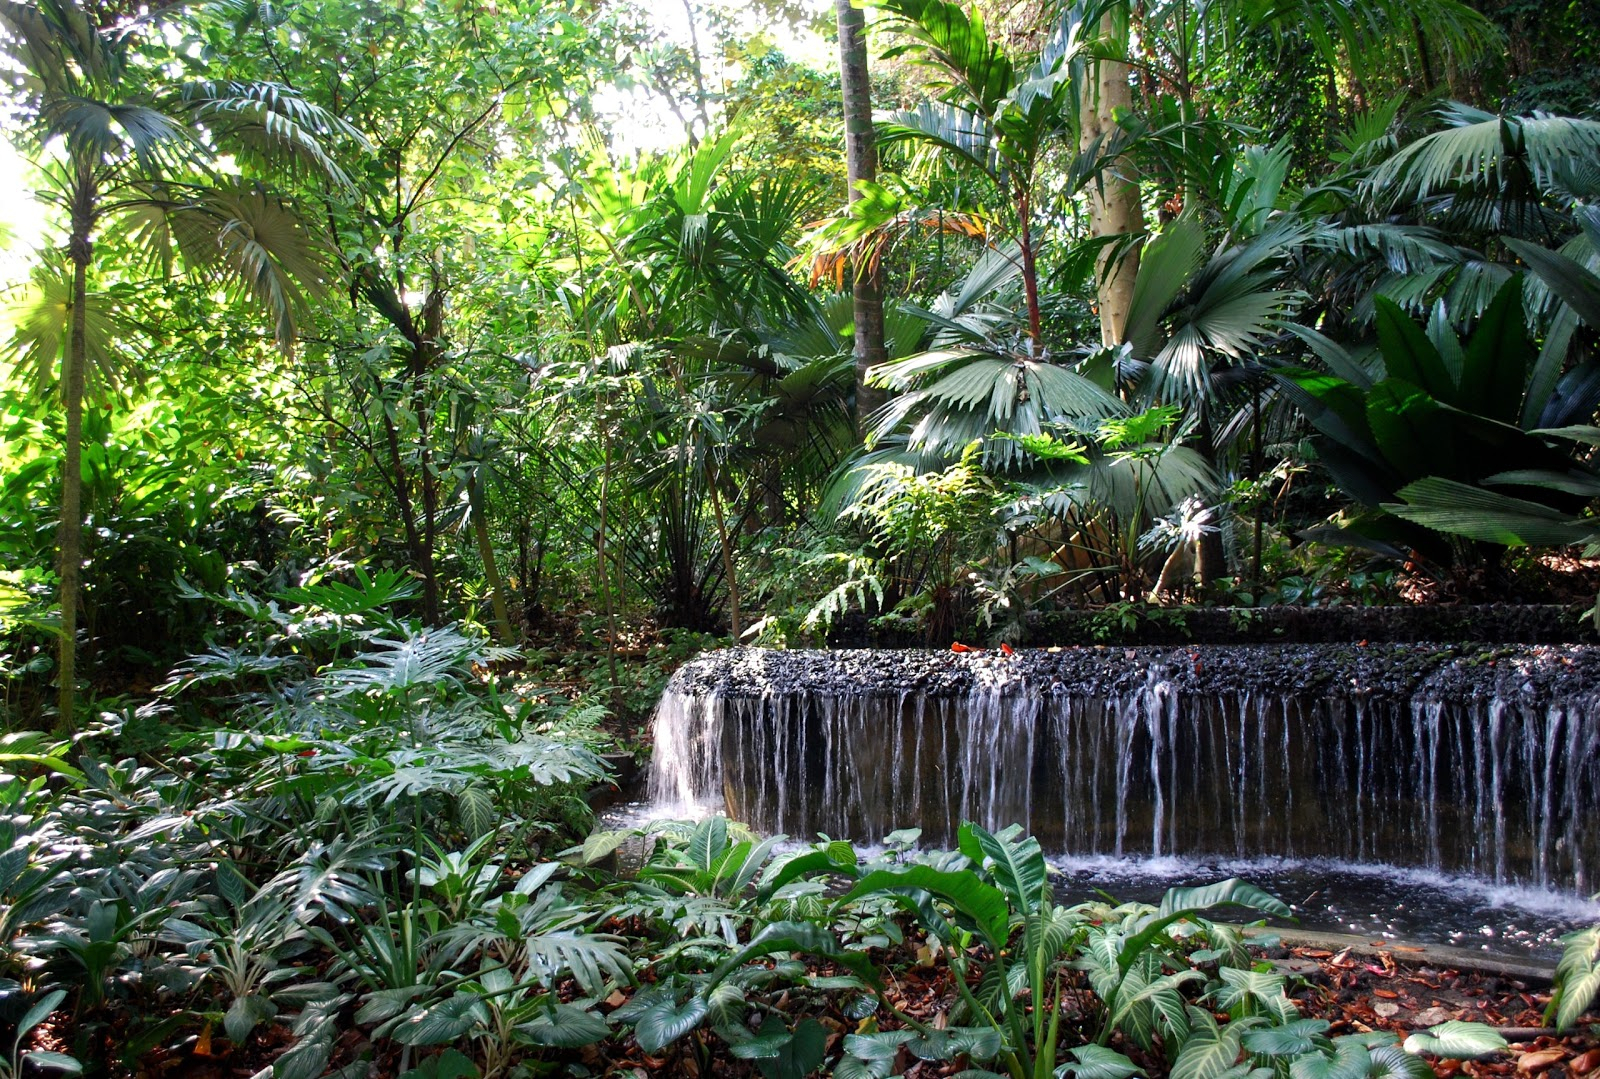 The Intercontinental Gardener: Strolling Through Steamy Singapore intended for Florist Singapore Botanical Garden